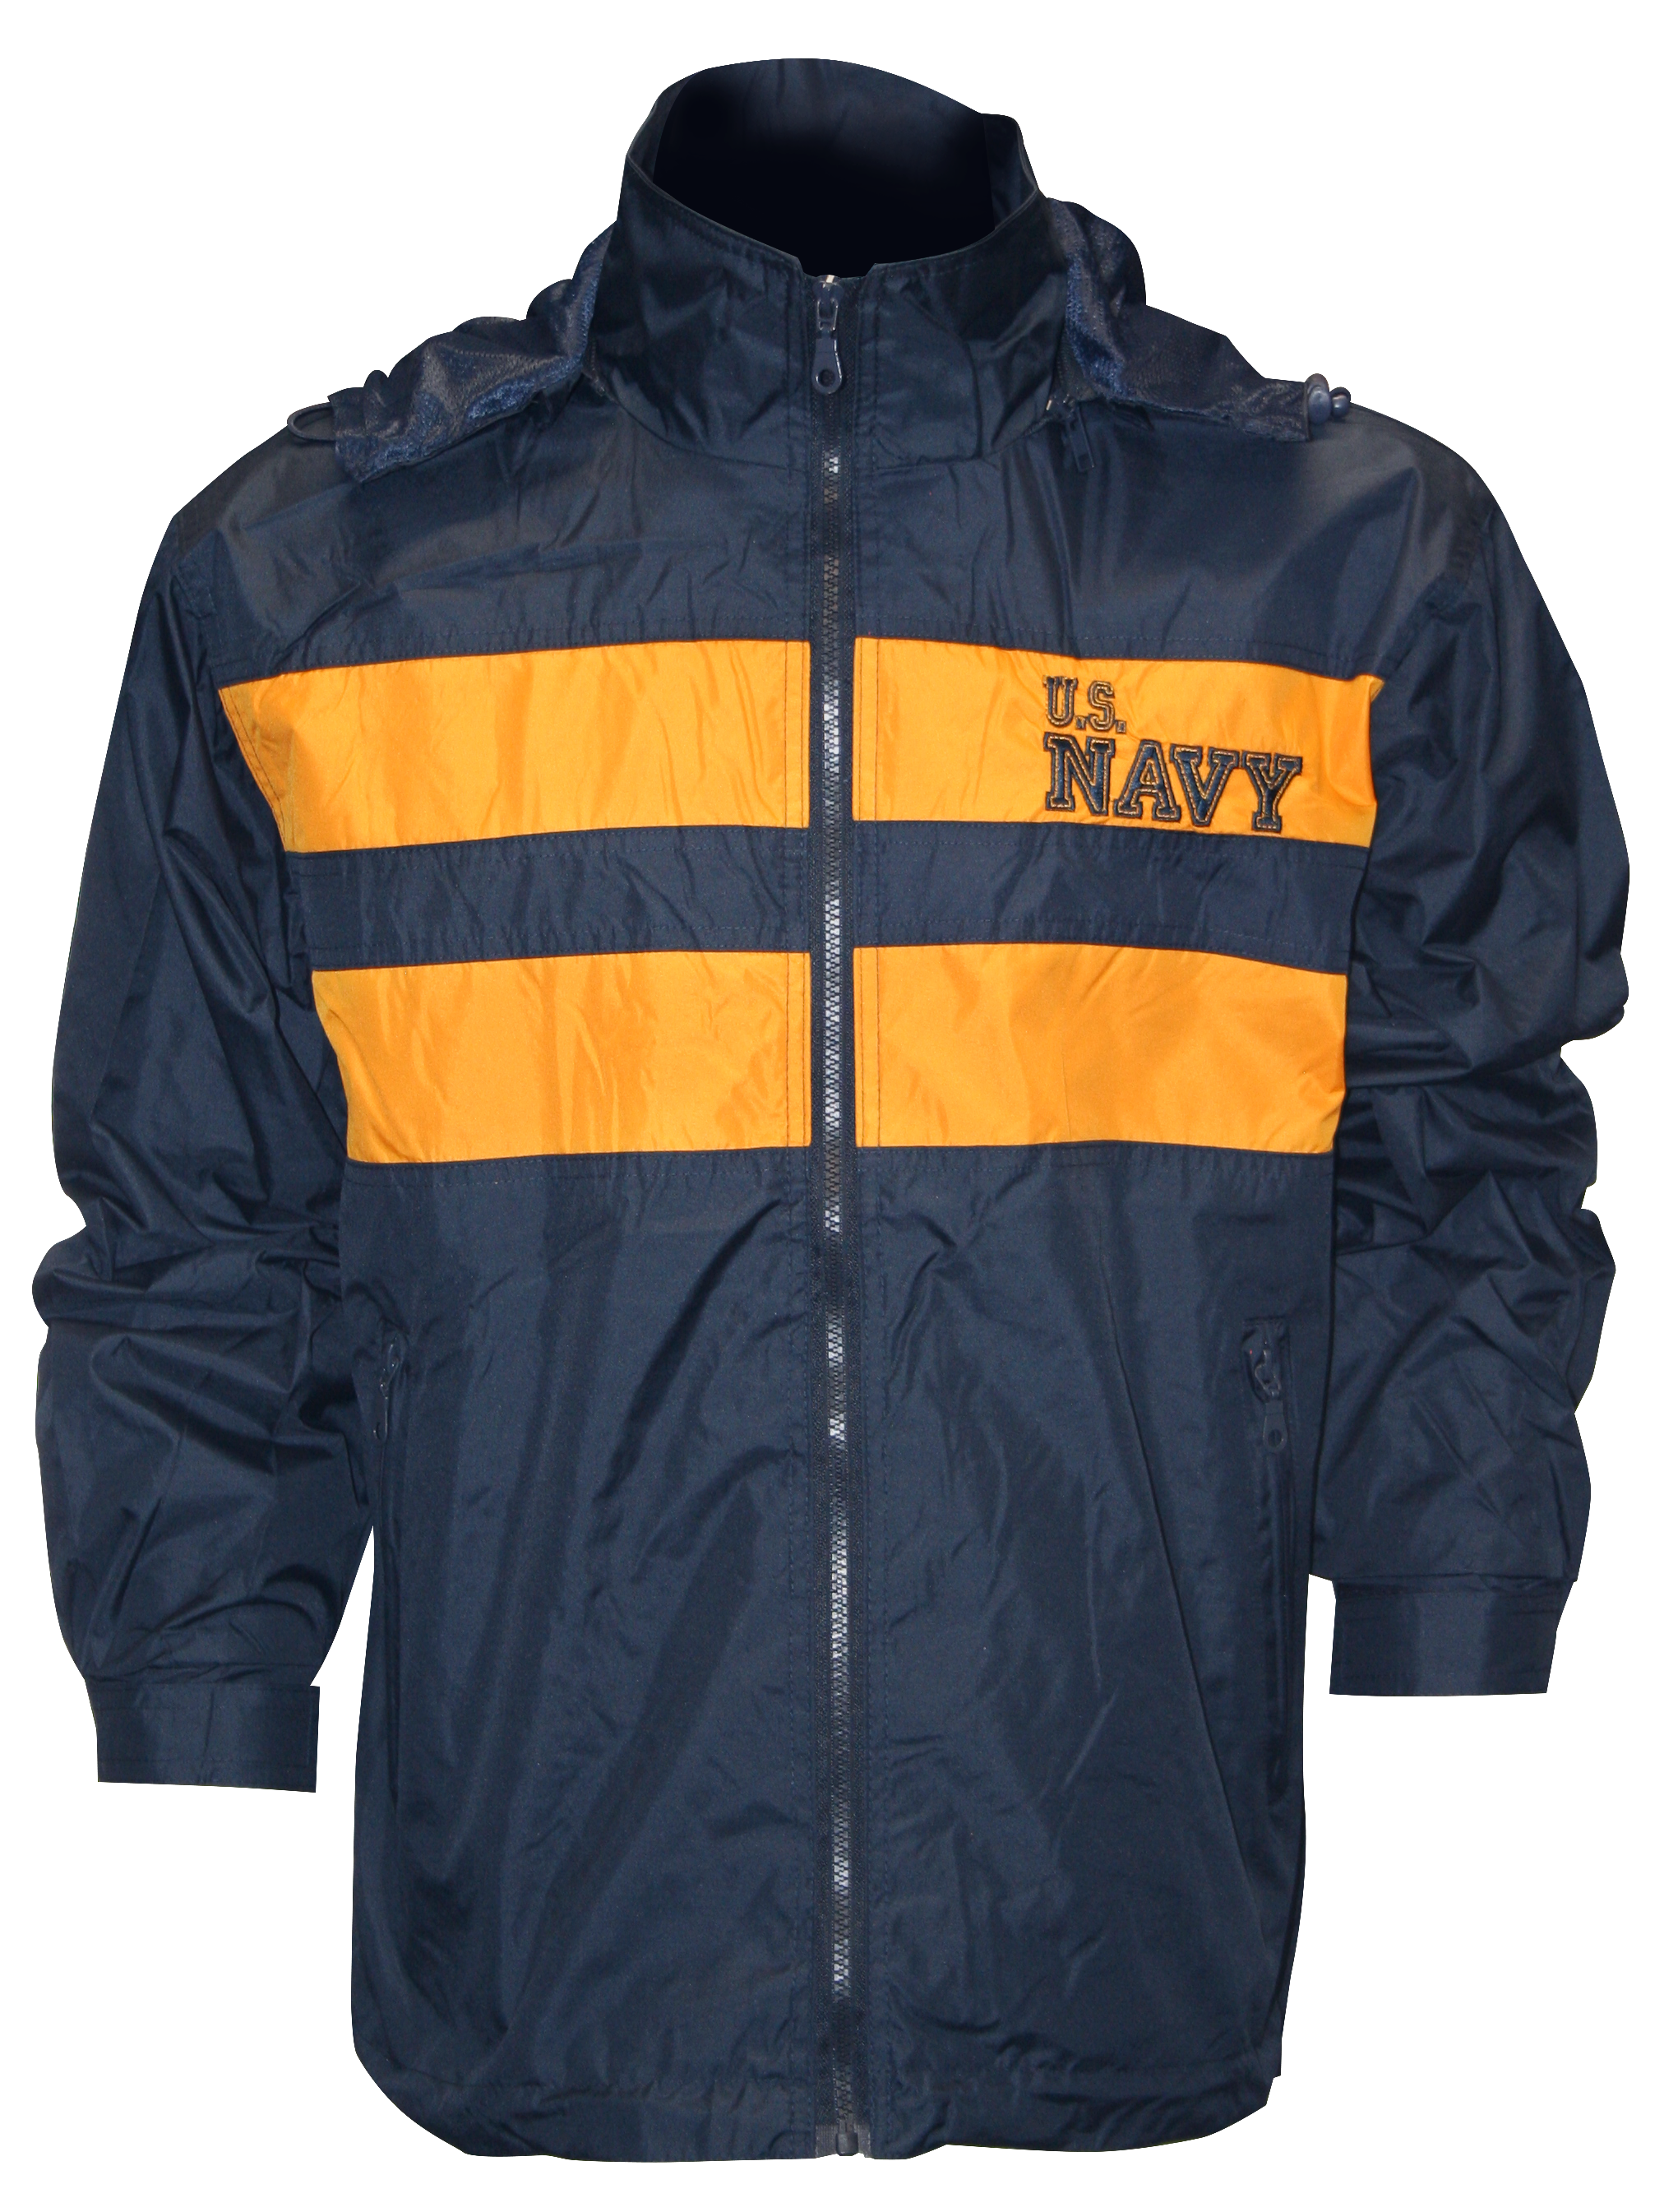 US Navy Stripes Windbreaker Jacket